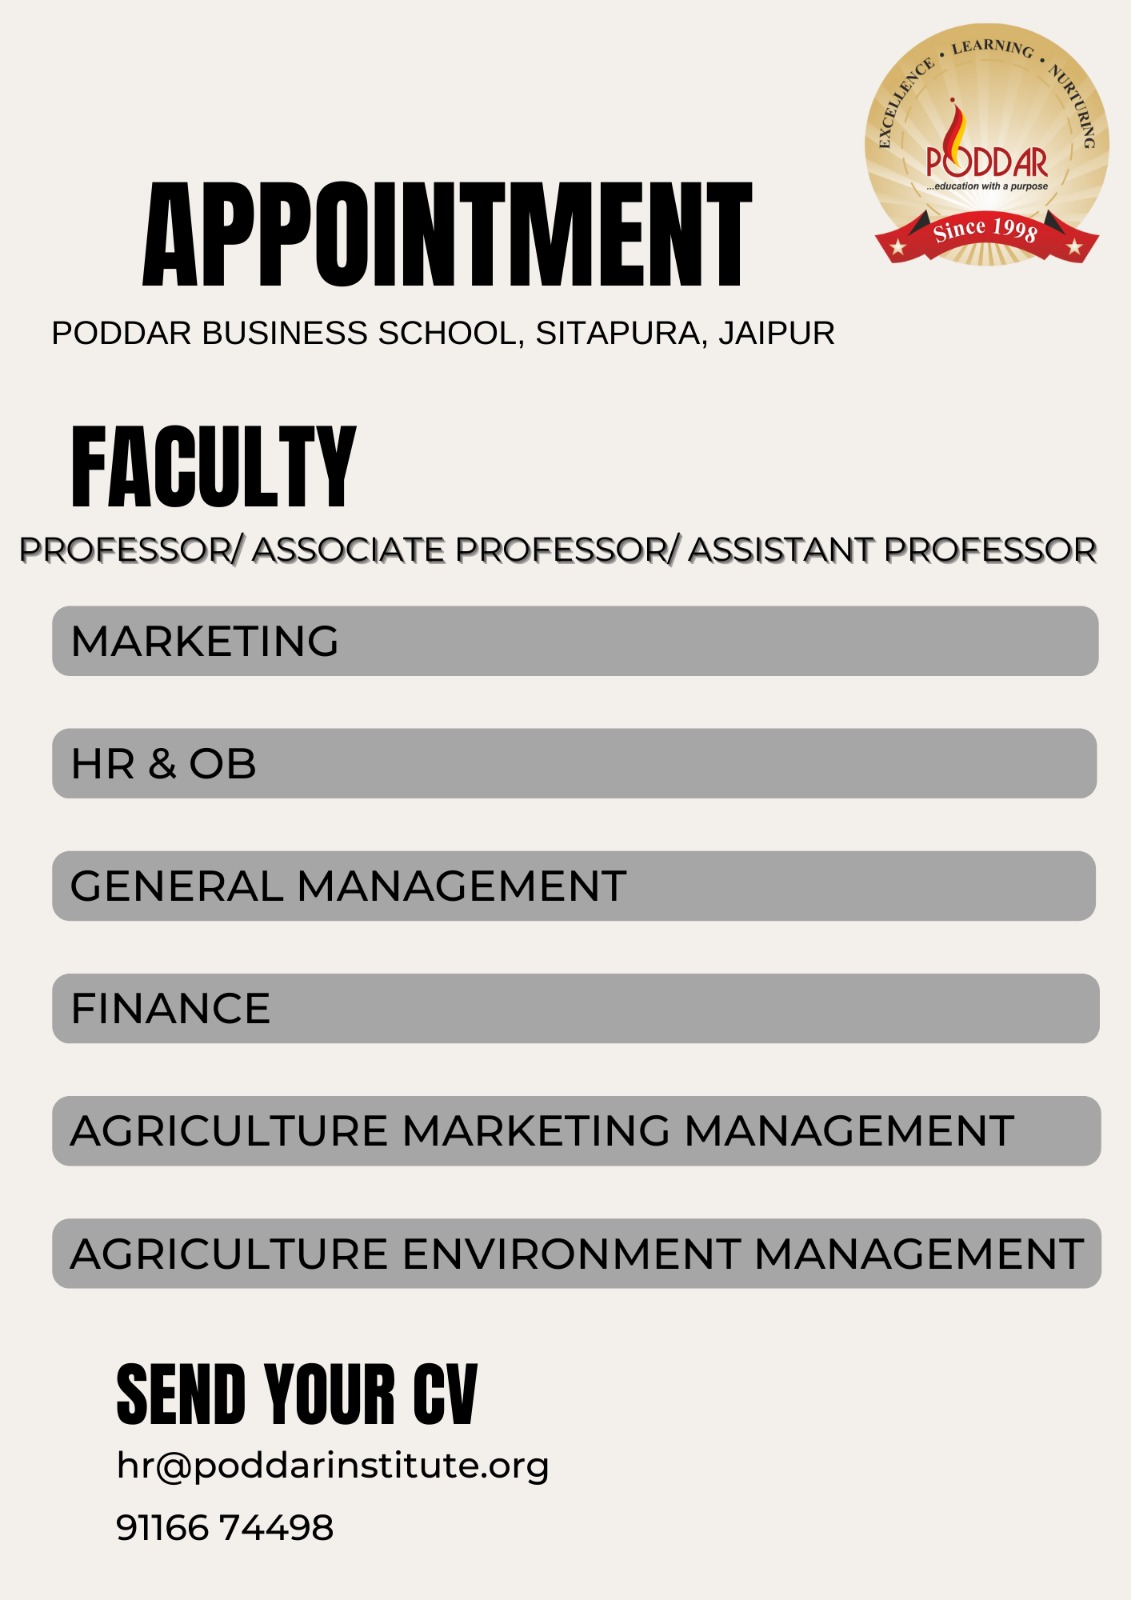 Professor / Associate Professor / Assistant Professor.